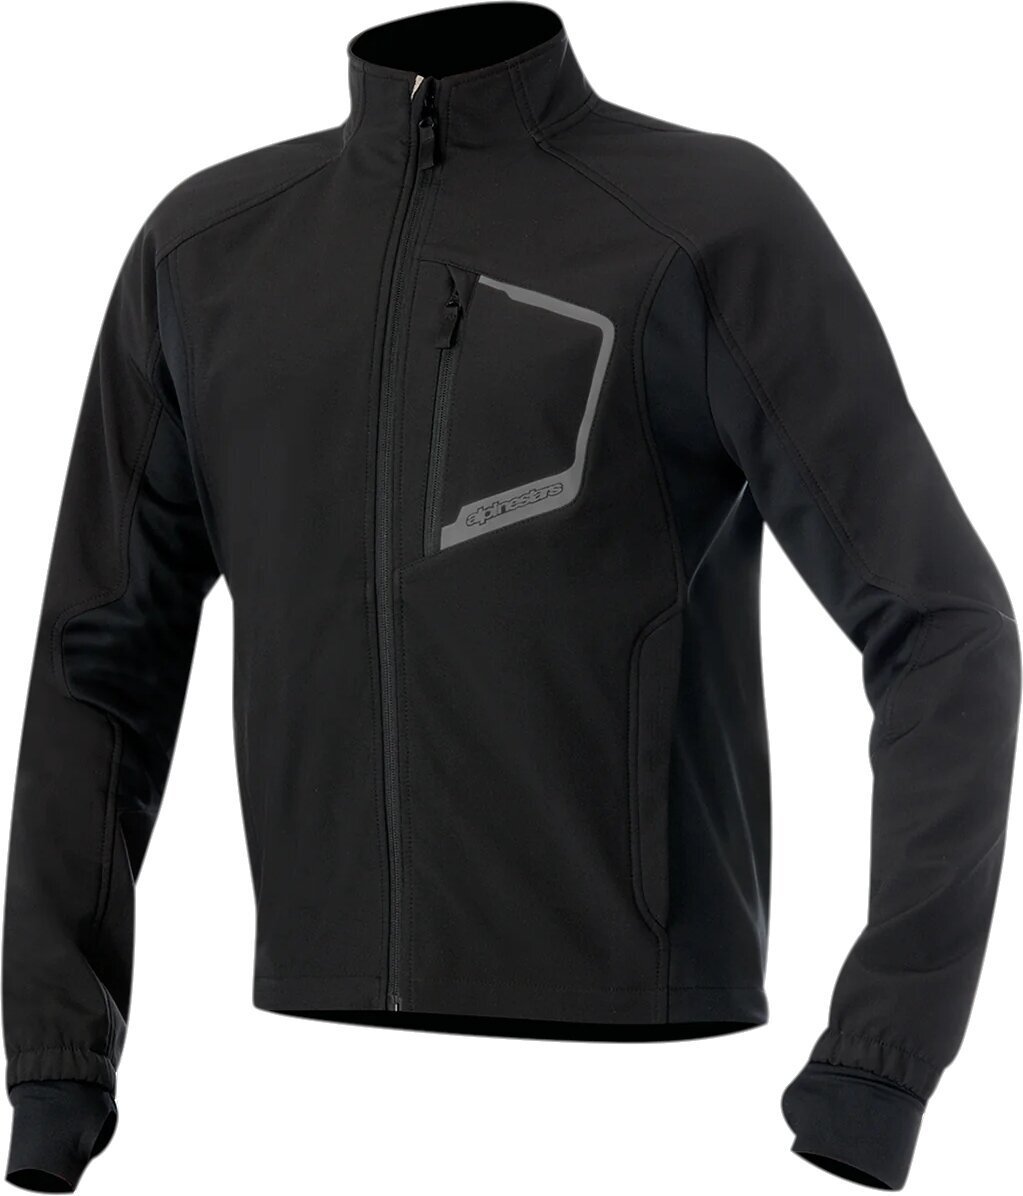 Textiele jas Alpinestars Tech Layer Top Black Black L Textiele jas